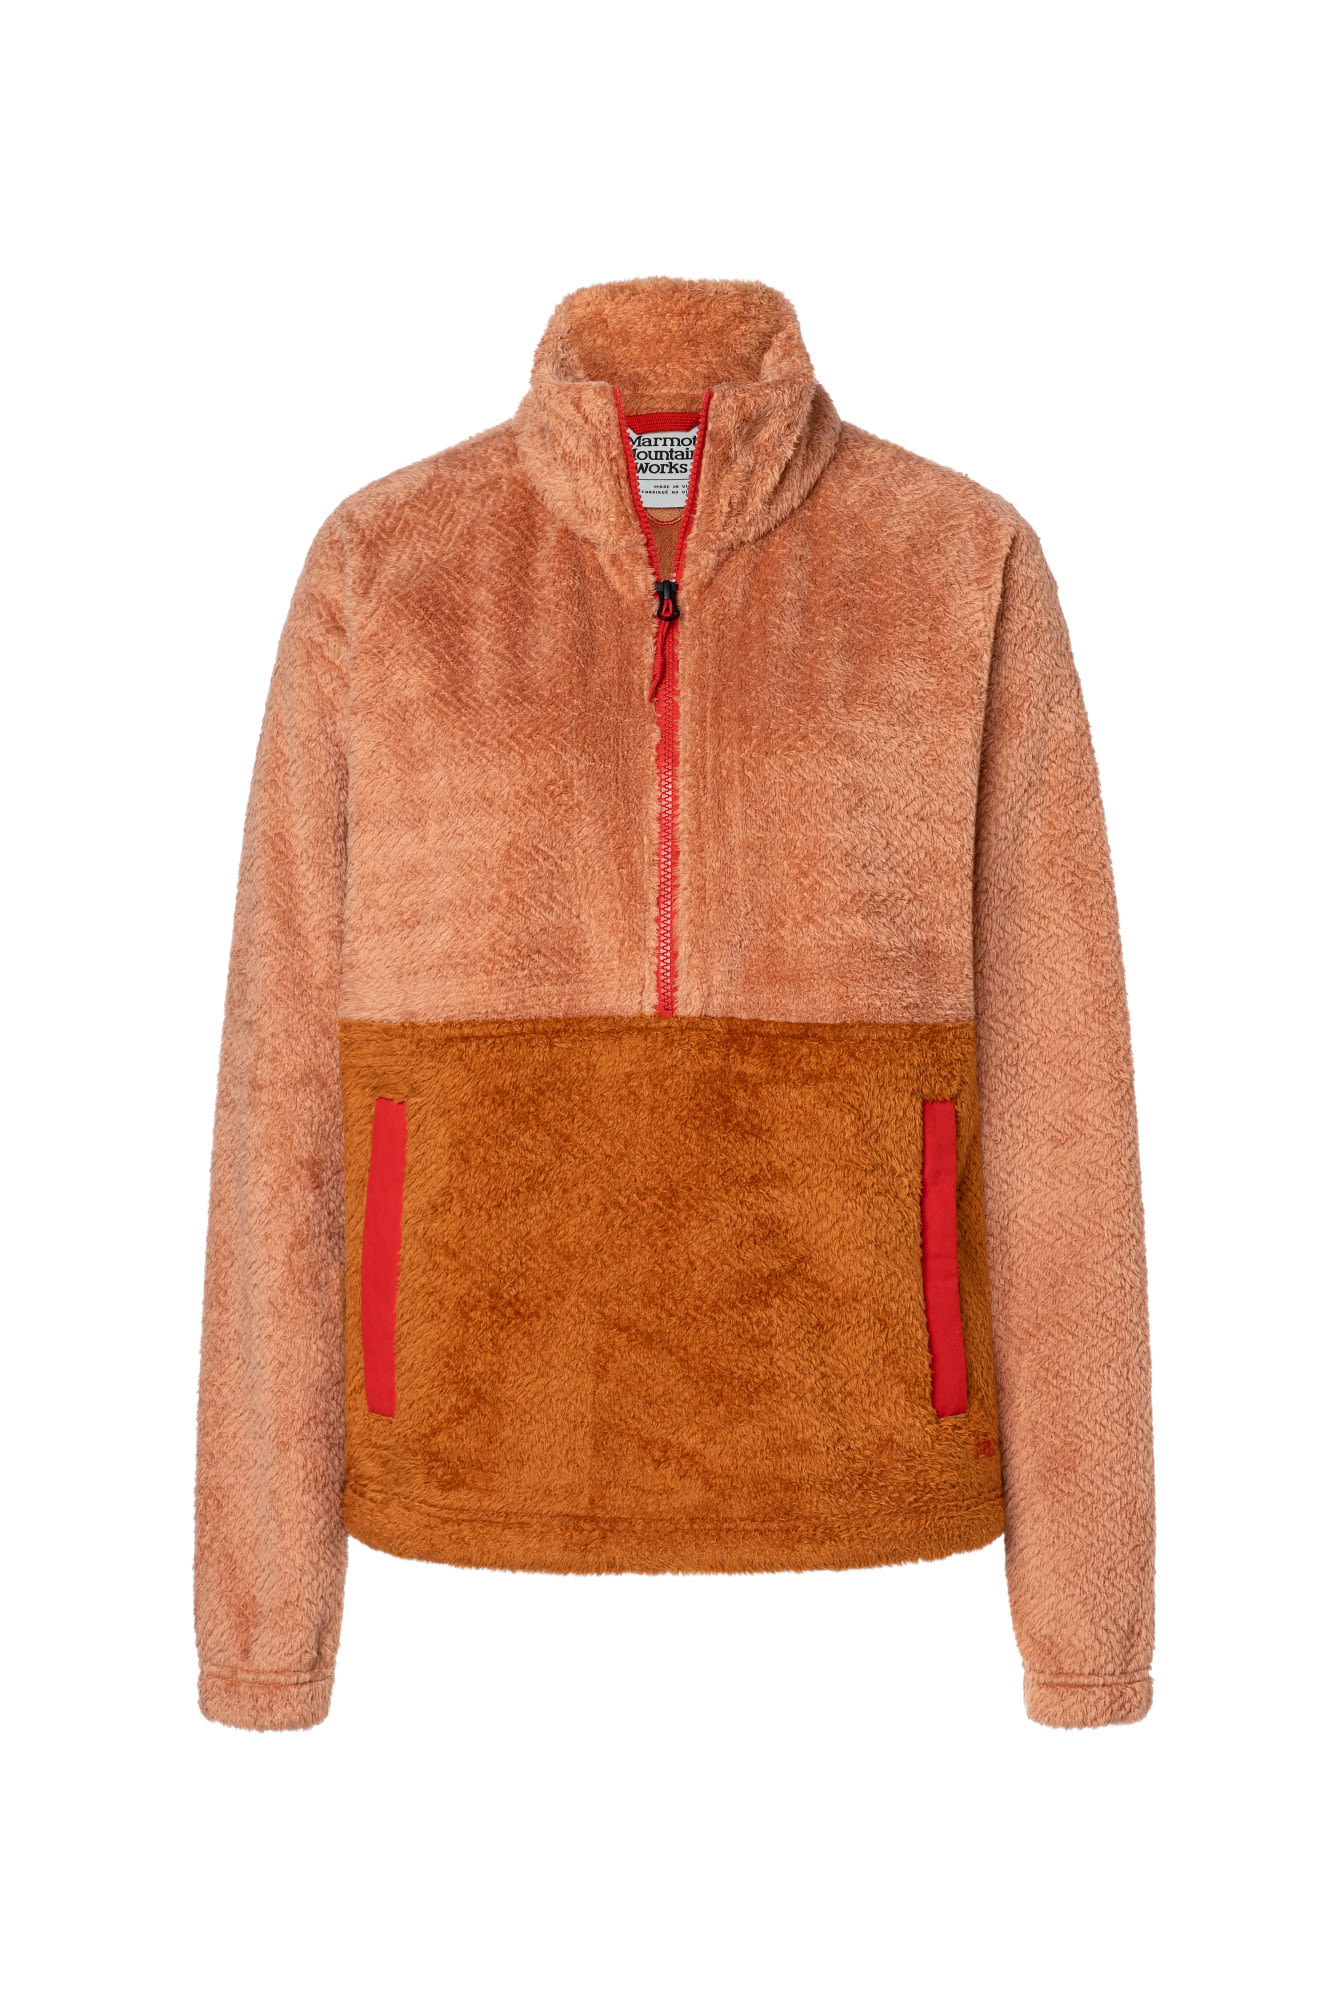 Marmot Homestead Fleece 1-2 Zip Colorblock - Braun- Female Fleece- und Powerstretch-Pullover- Grsse S - Farbe Rose Gold - Copper unter Marmot